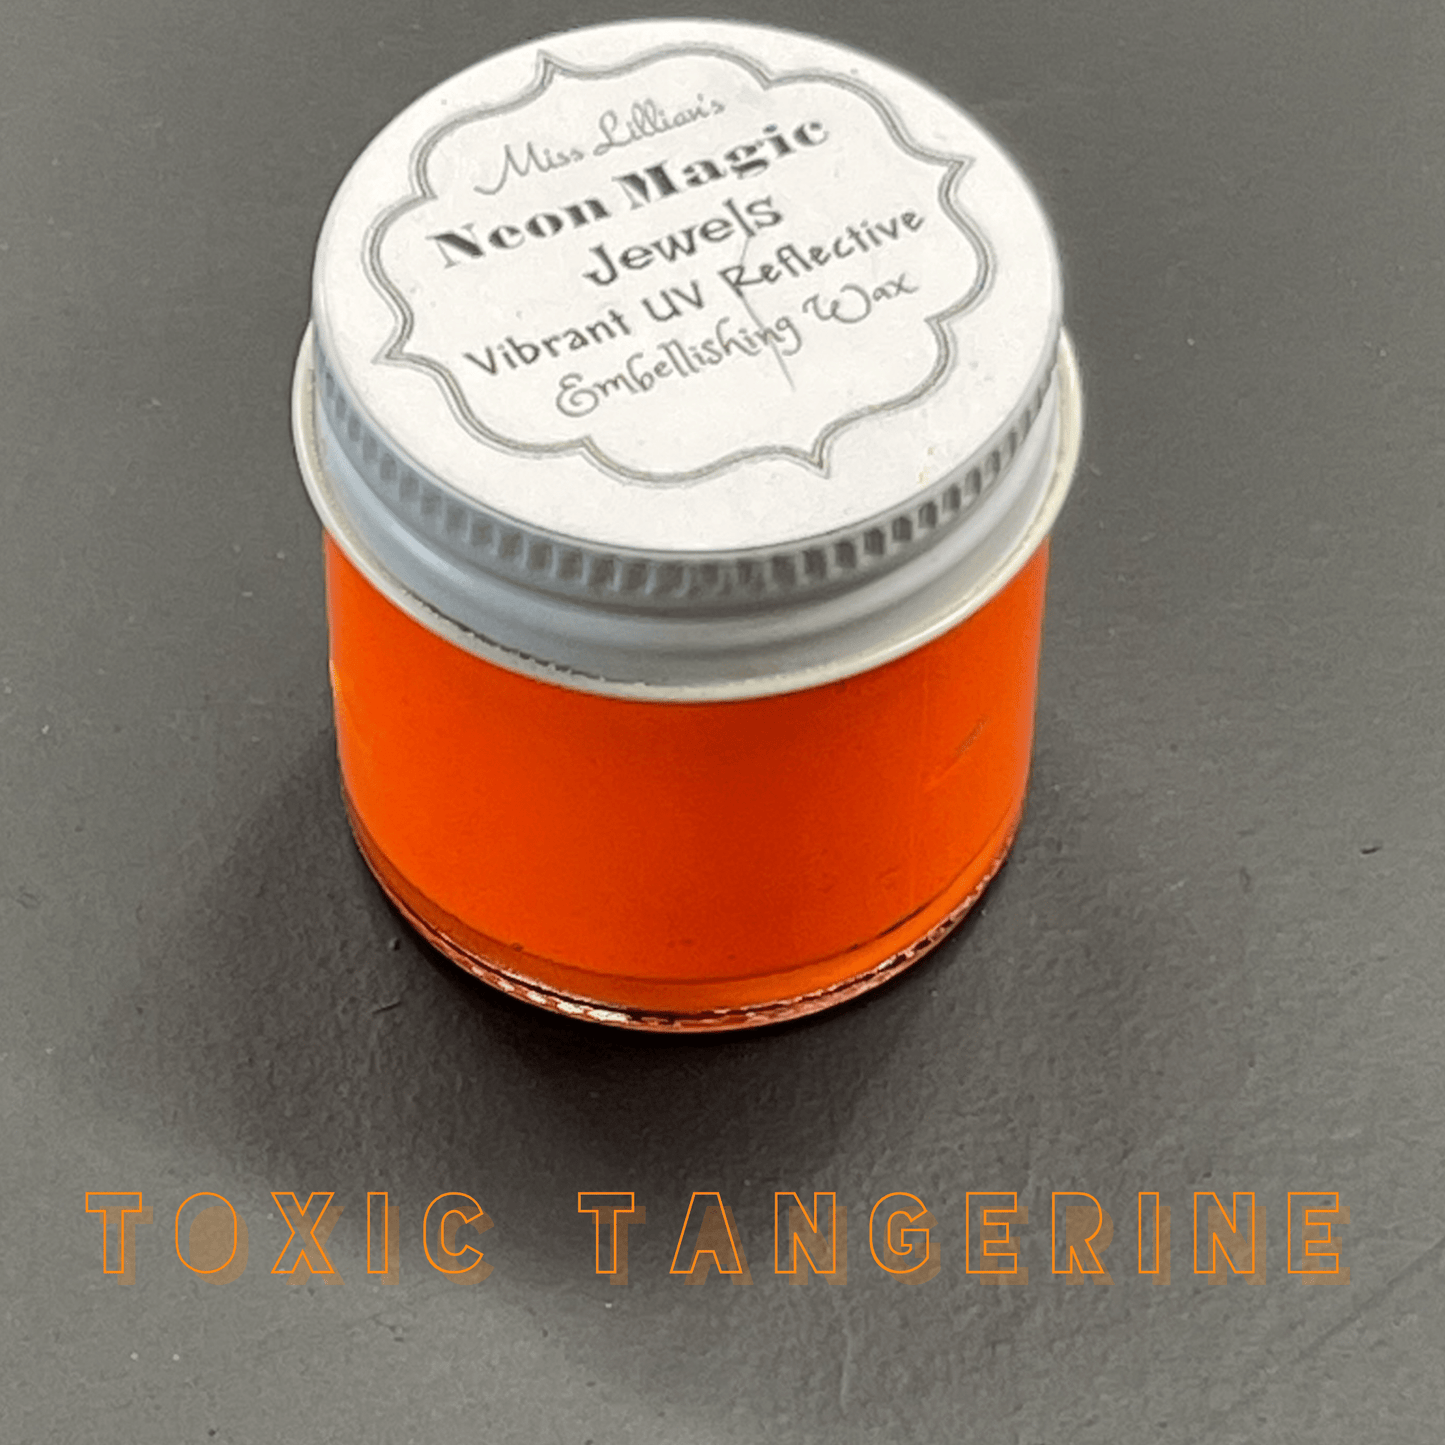 Miss Lillians Chock Paint Neon Waxes TOXIC TANGERINE-NEON Gilding Wax Jewels (Tangerine Orange)